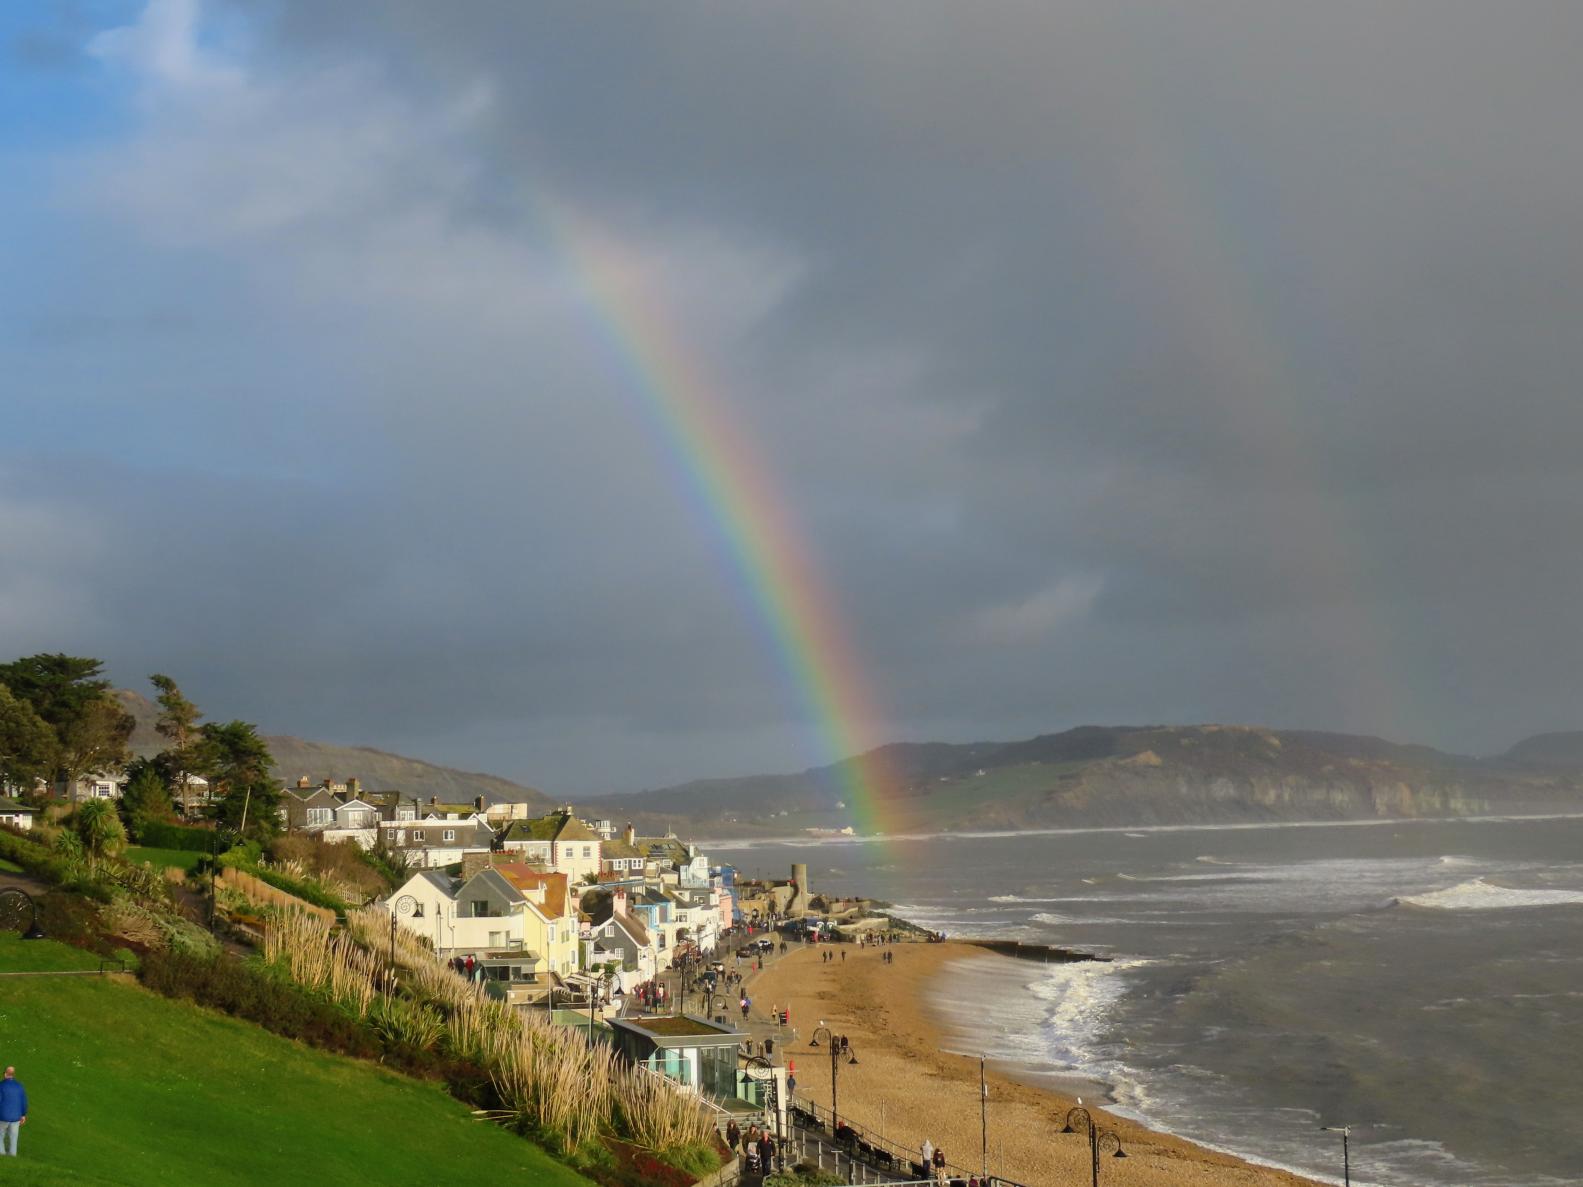 Double rainbow over the pebble beach, Lyme Regis